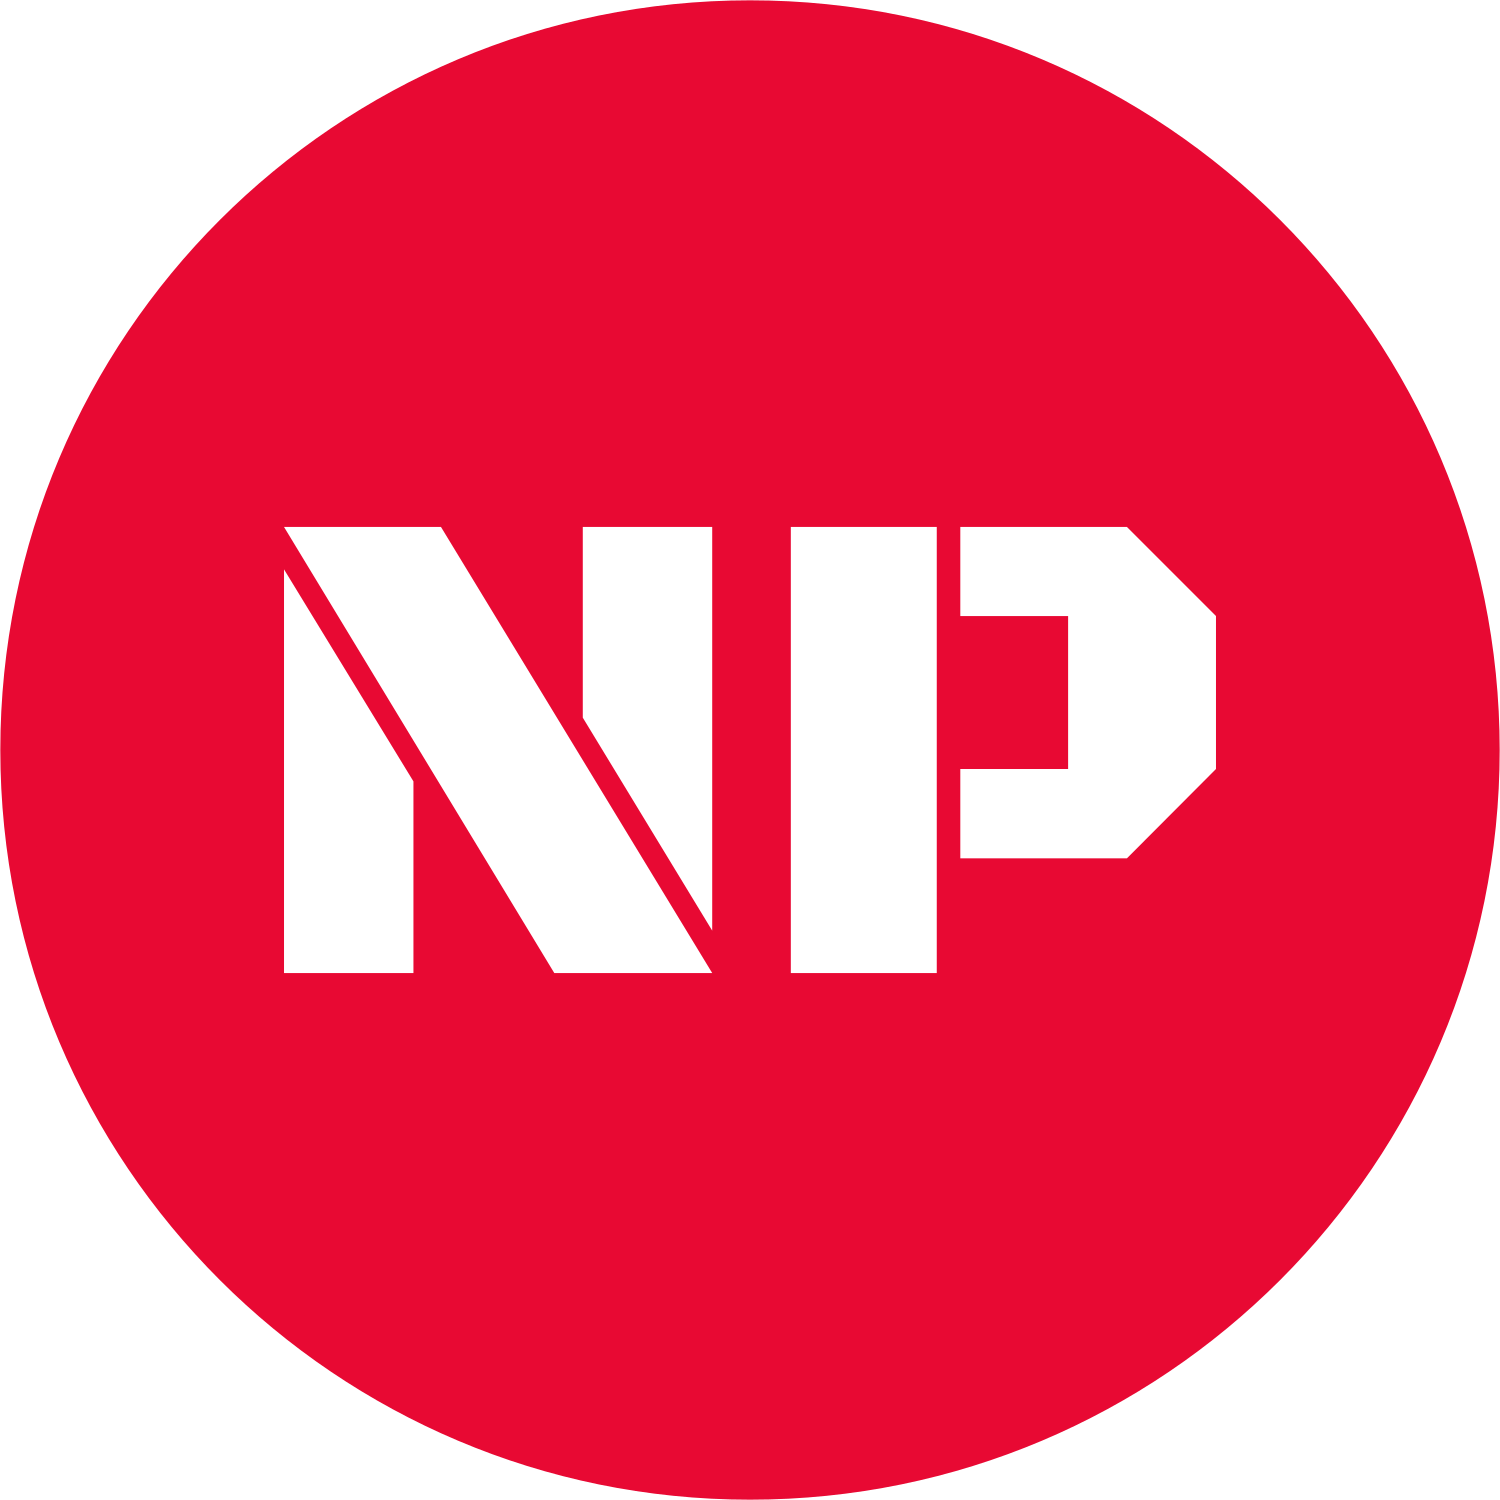 News Portal NP Logo